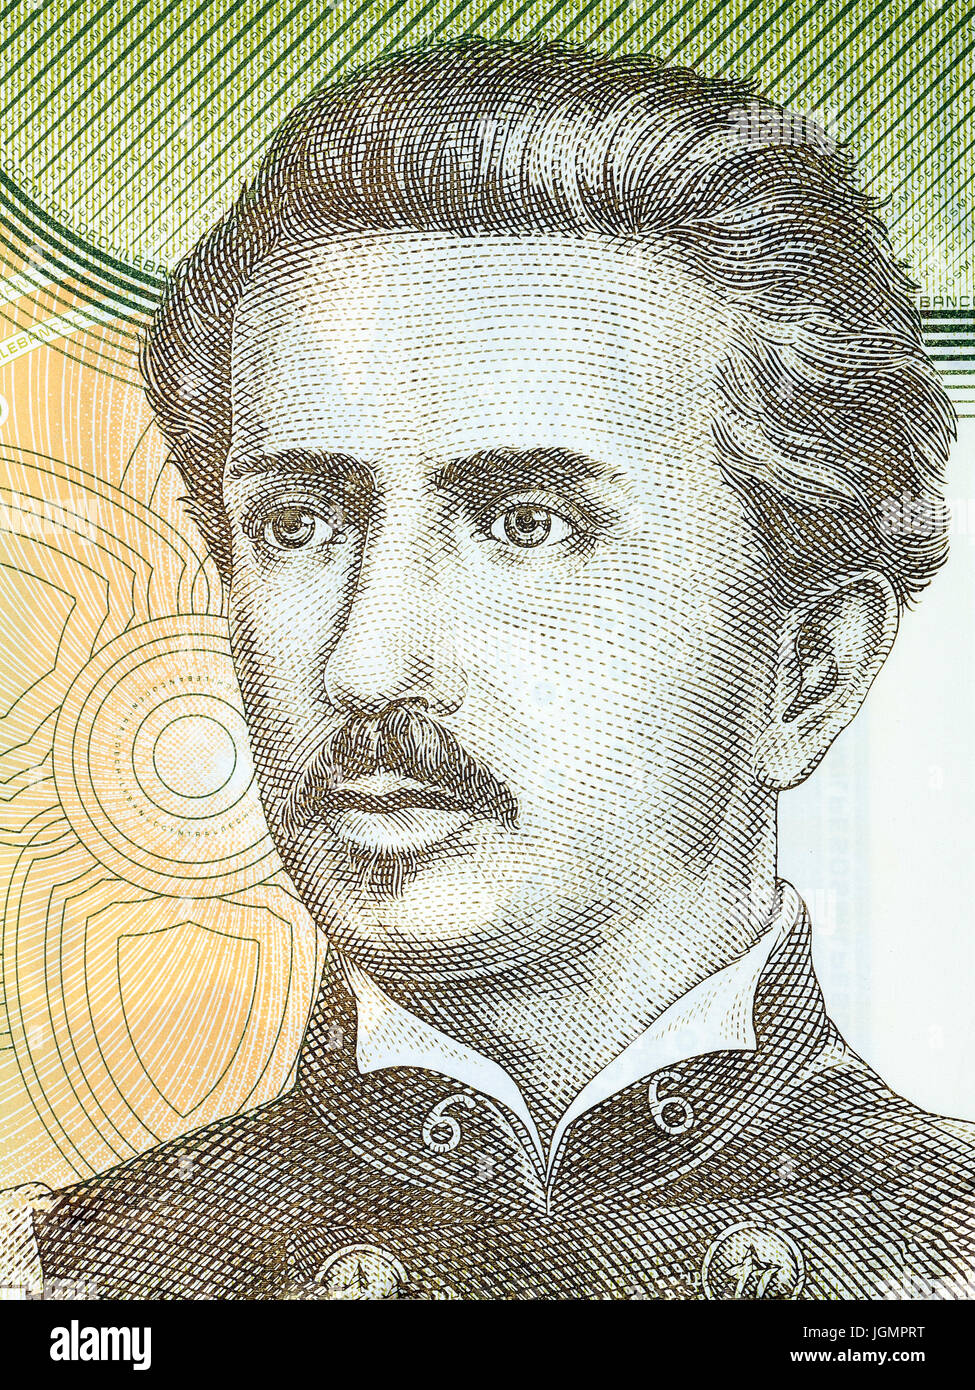 Ignacio Carrera Pinto portrait from Chilean money Stock Photo - Alamy